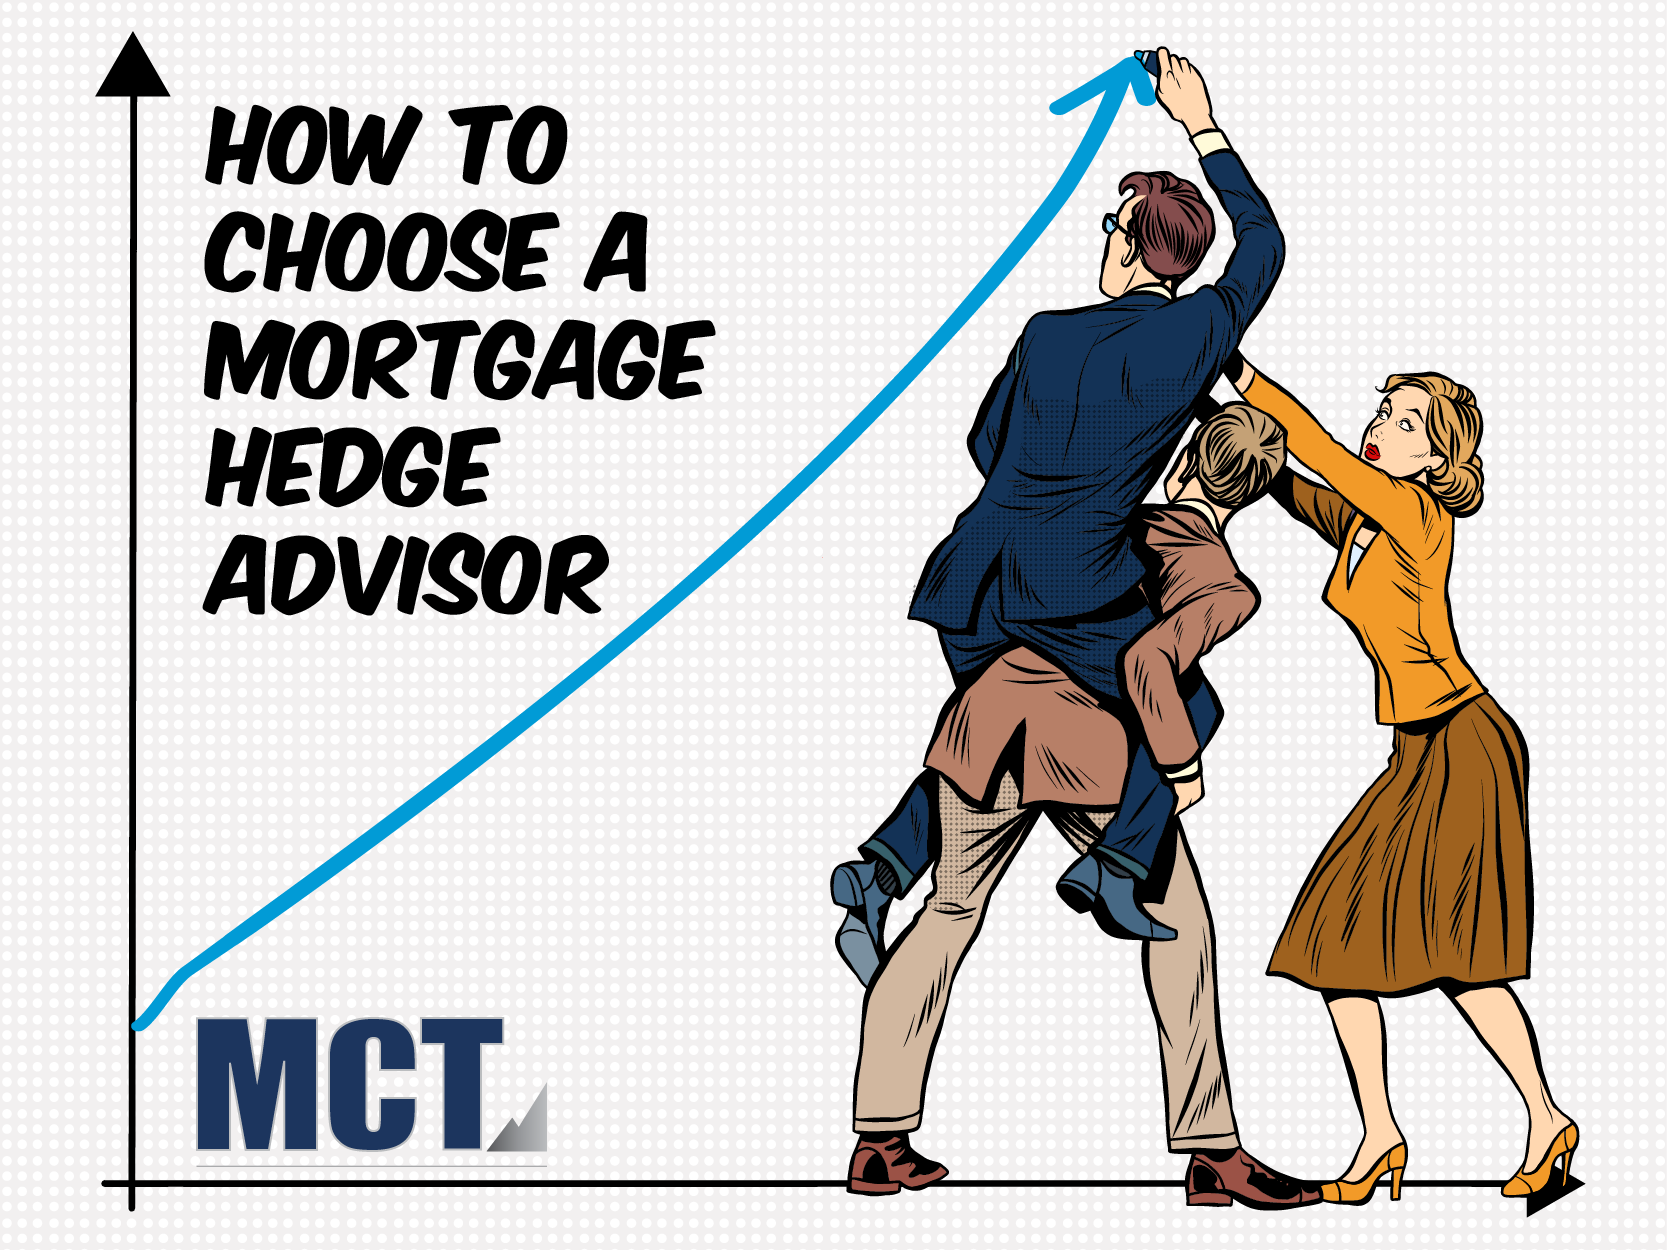 How to Choose a Mortgage Hedge Advisor